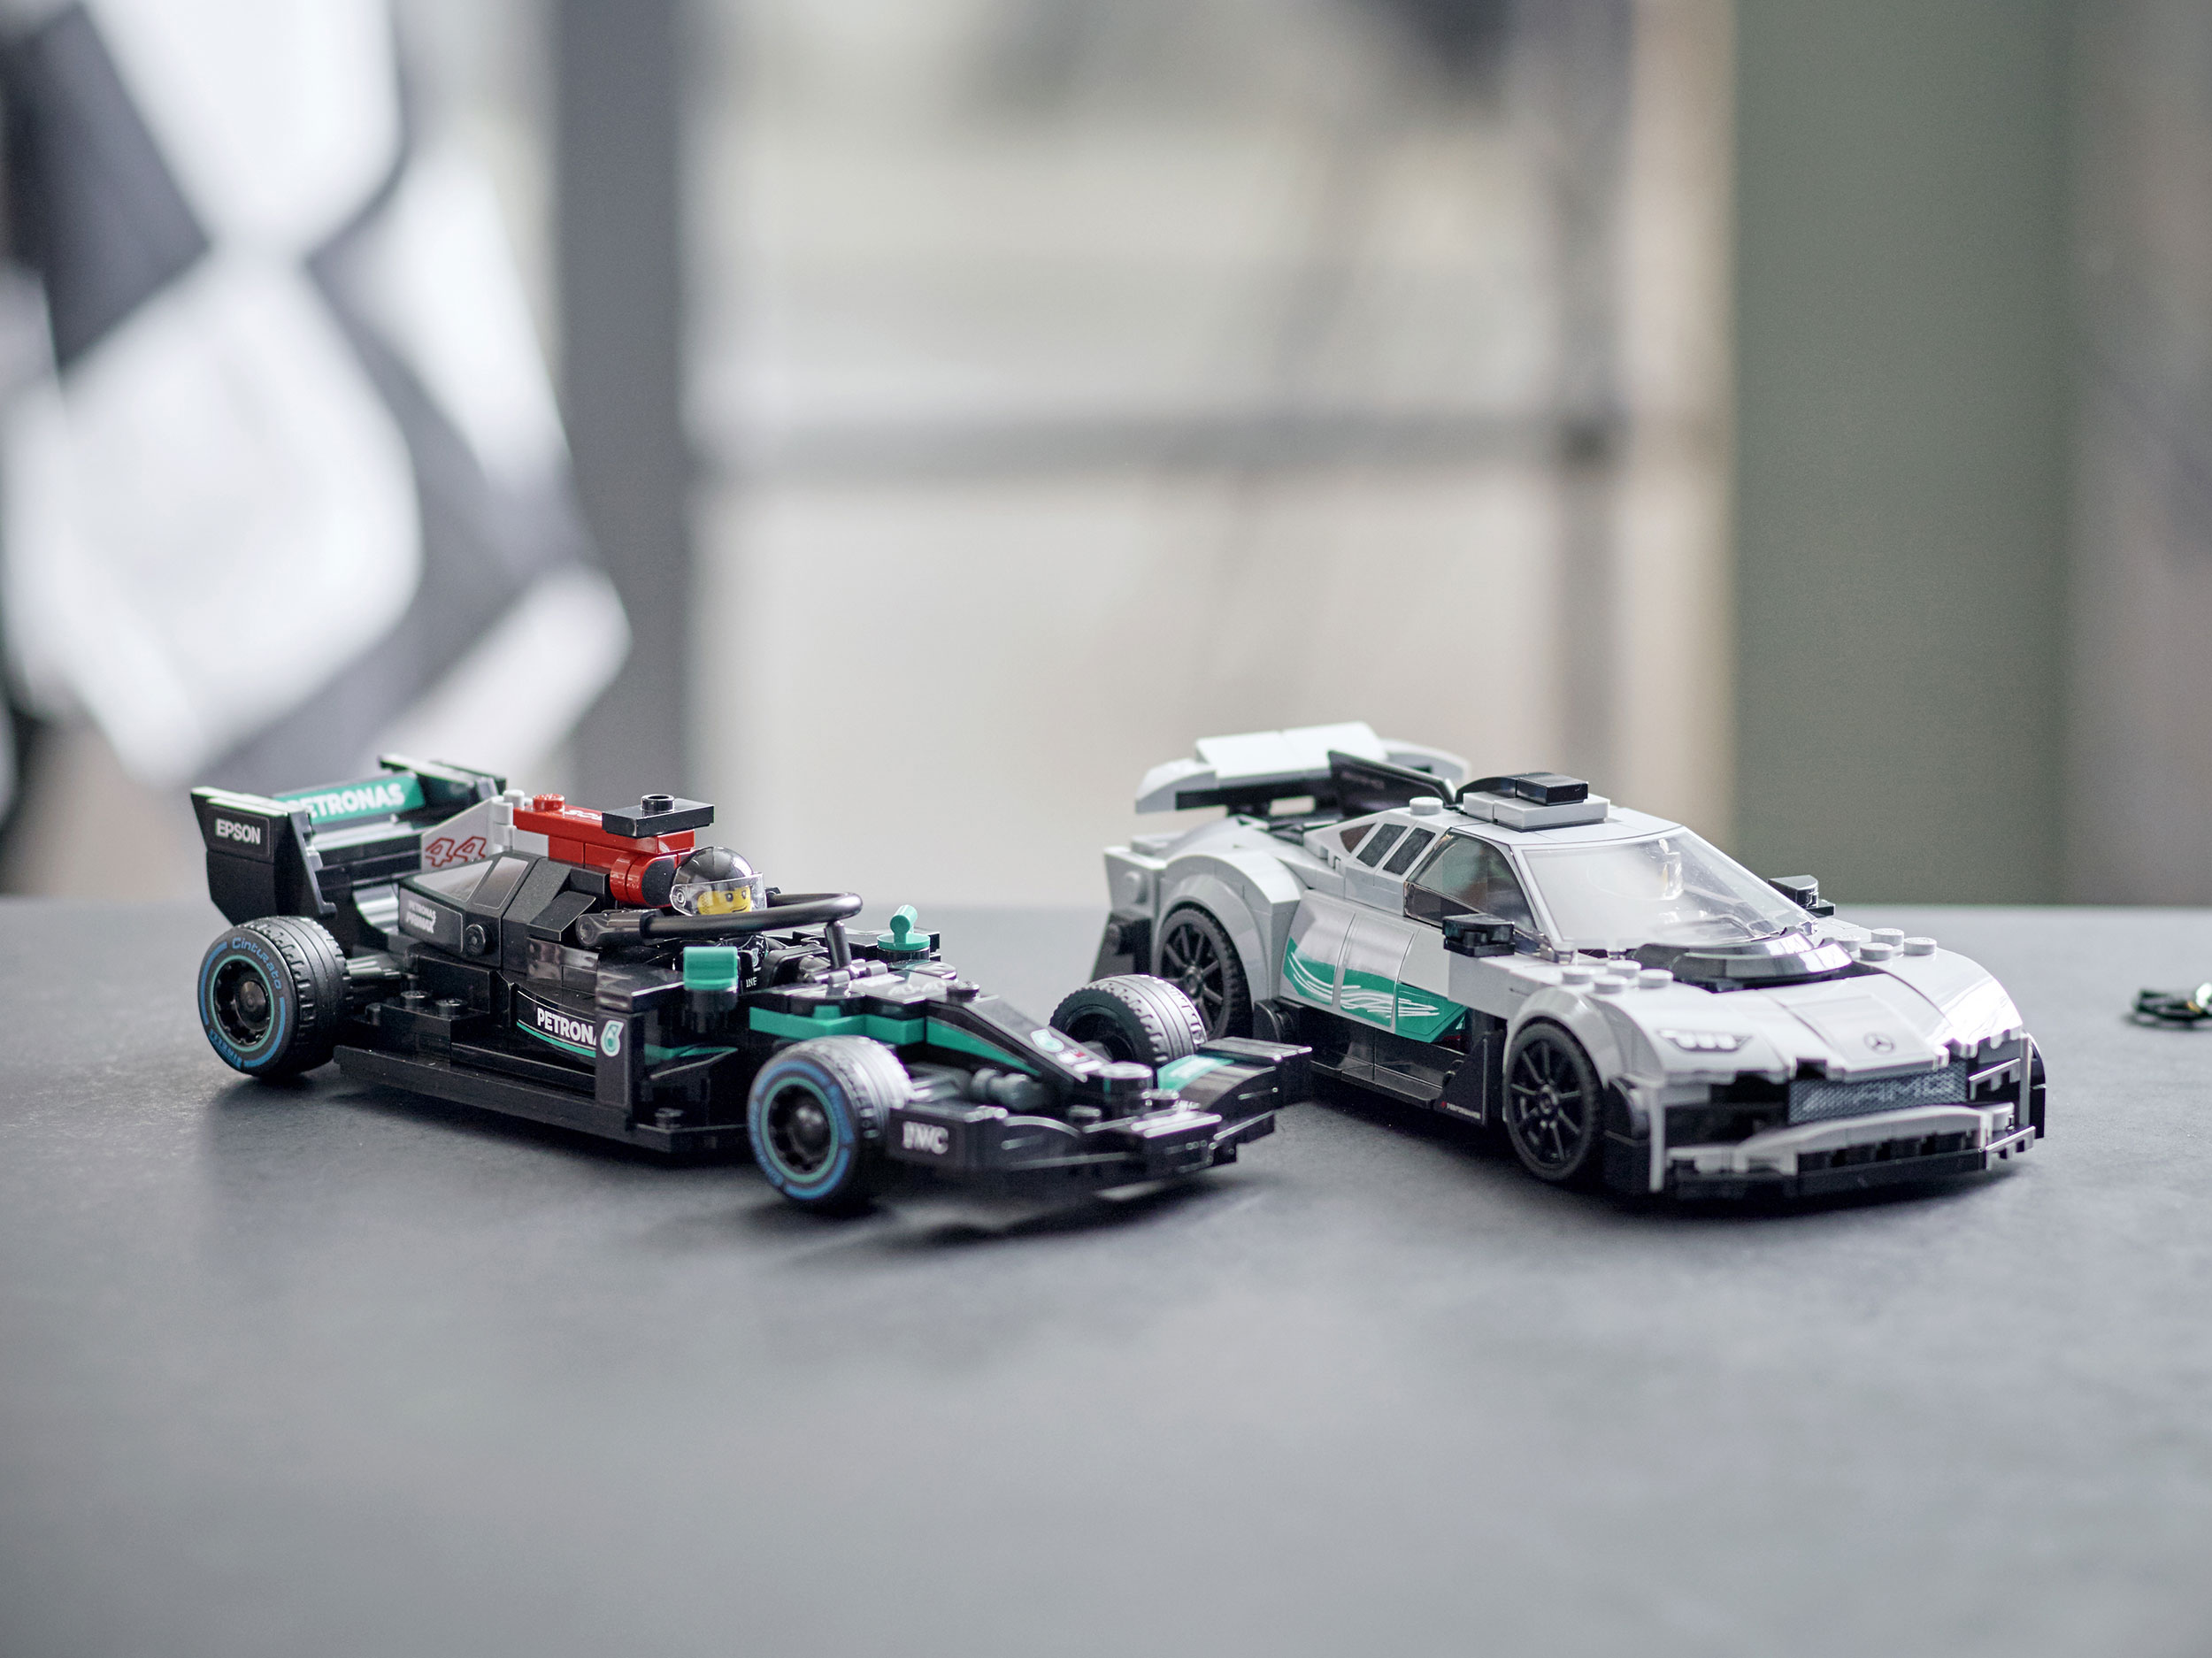 Конструктор LEGO Speed Champions 76909 Модель Mercedes-AMG F1 W12 E